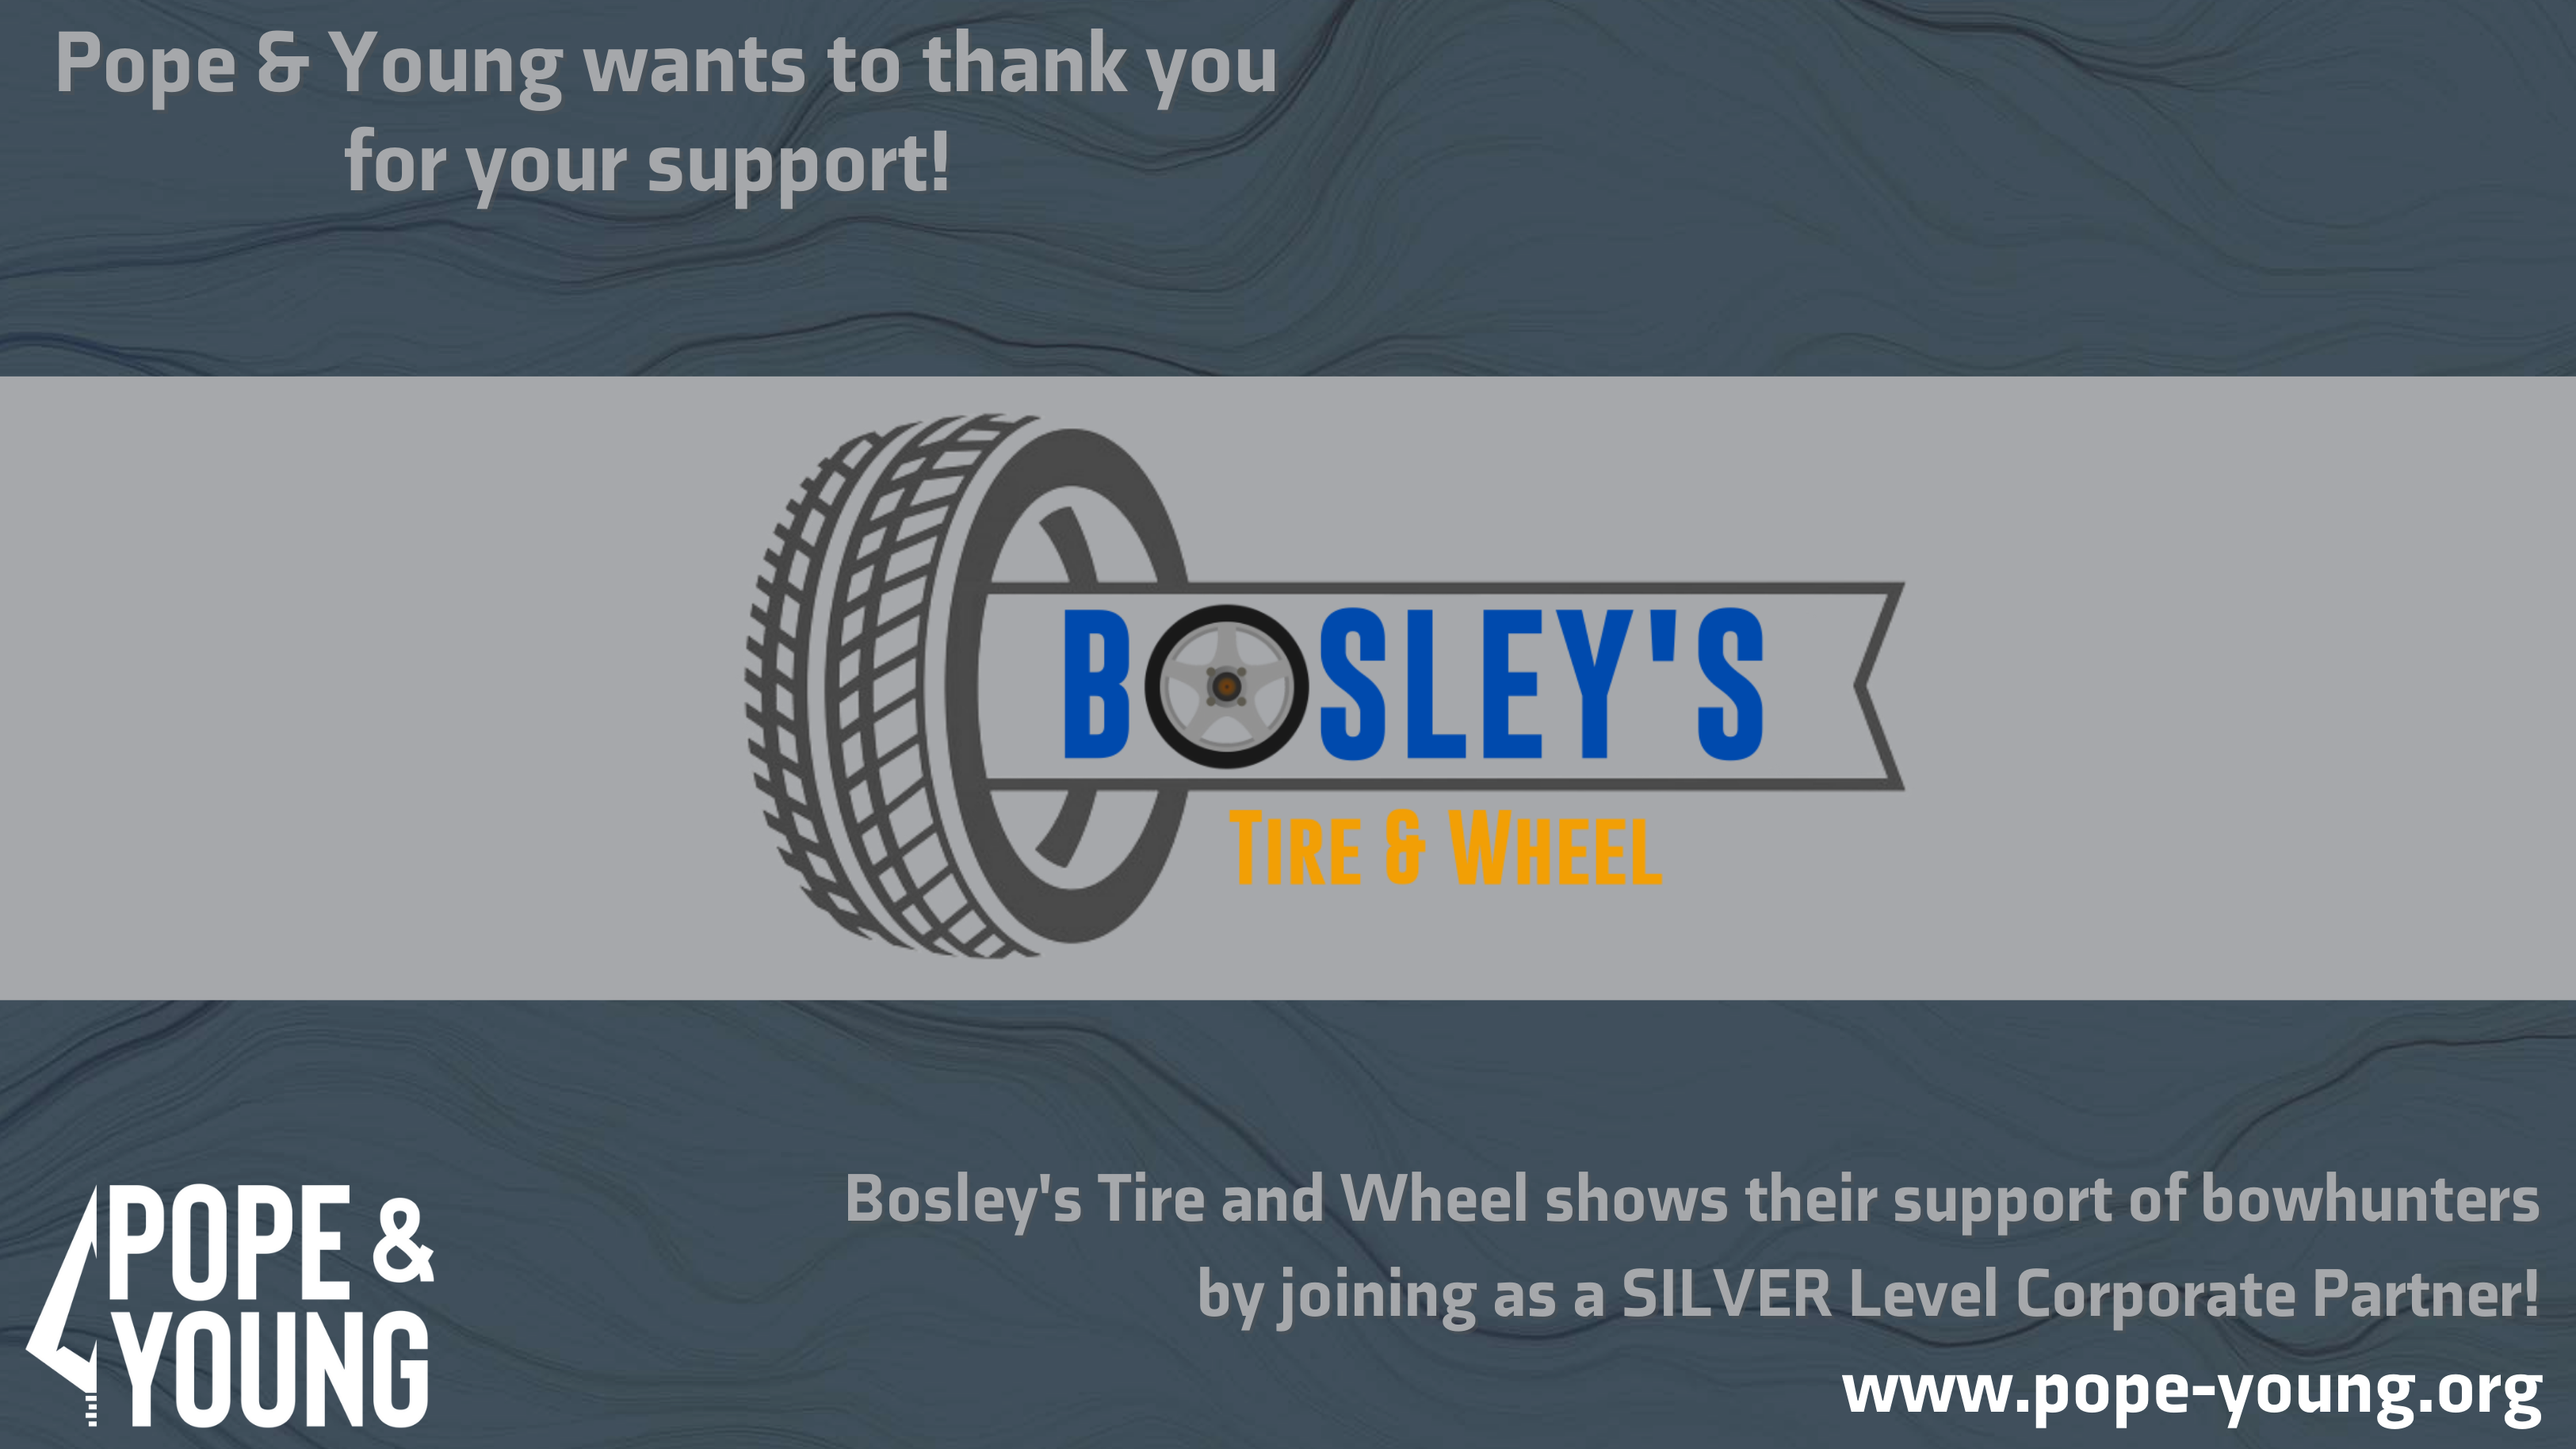 
Bosley’s Tire and Wheel Backs Bowhunting